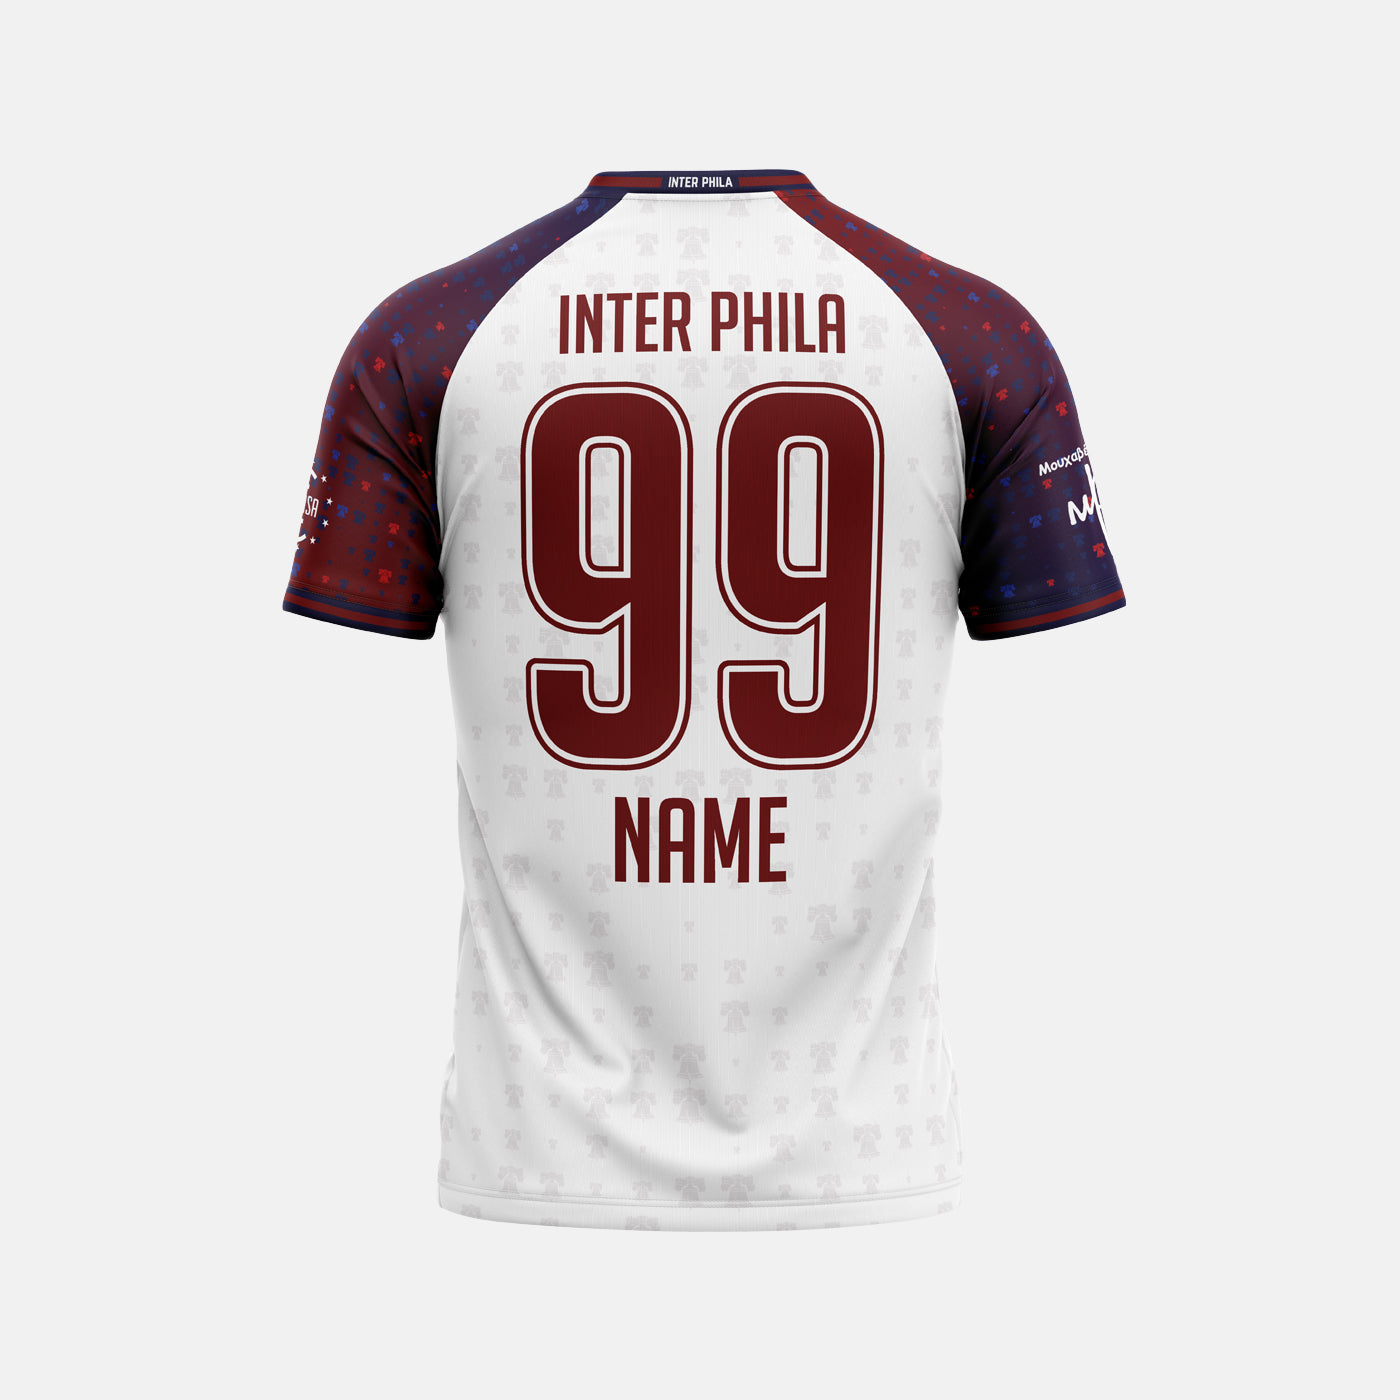 Inter Phila White Jersey